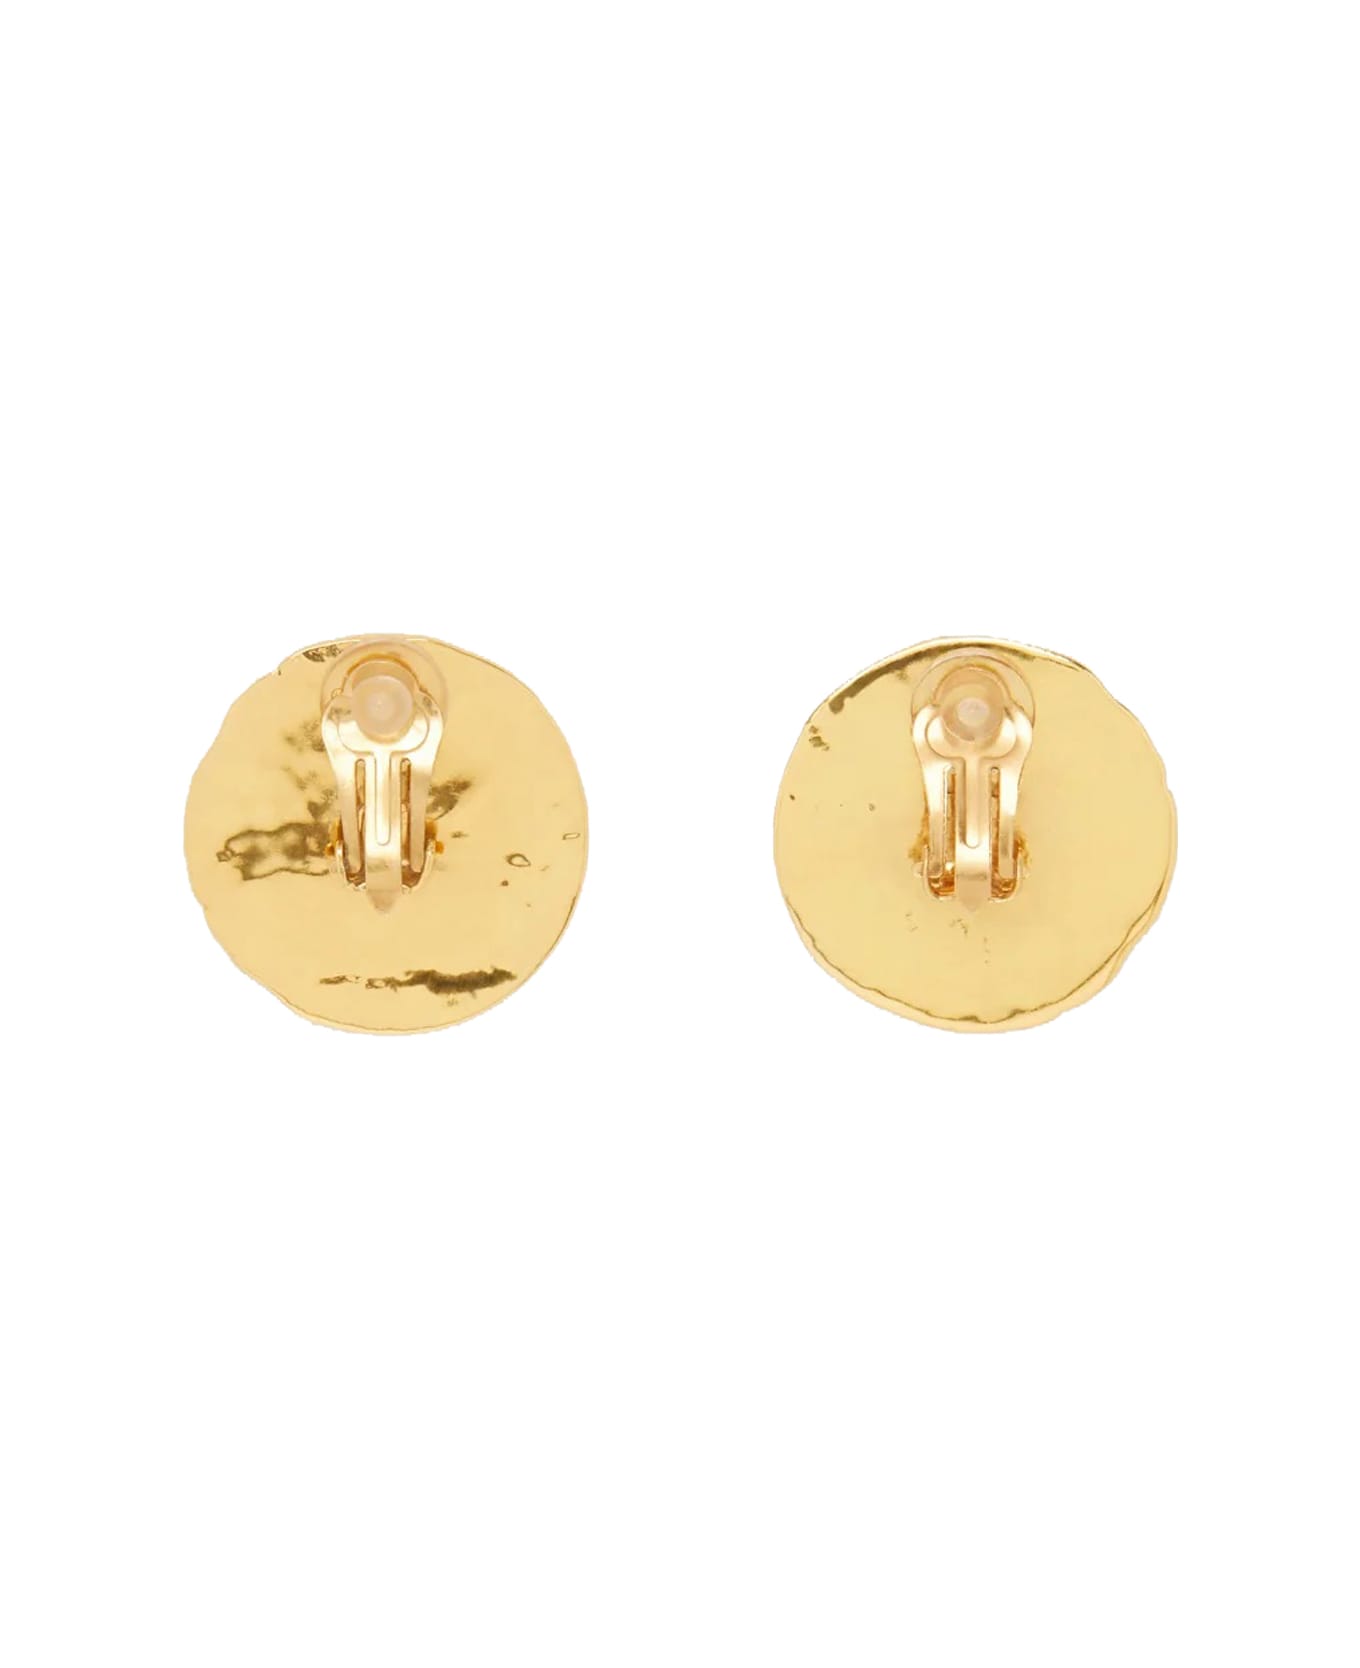 Patou Earrings - GOLD